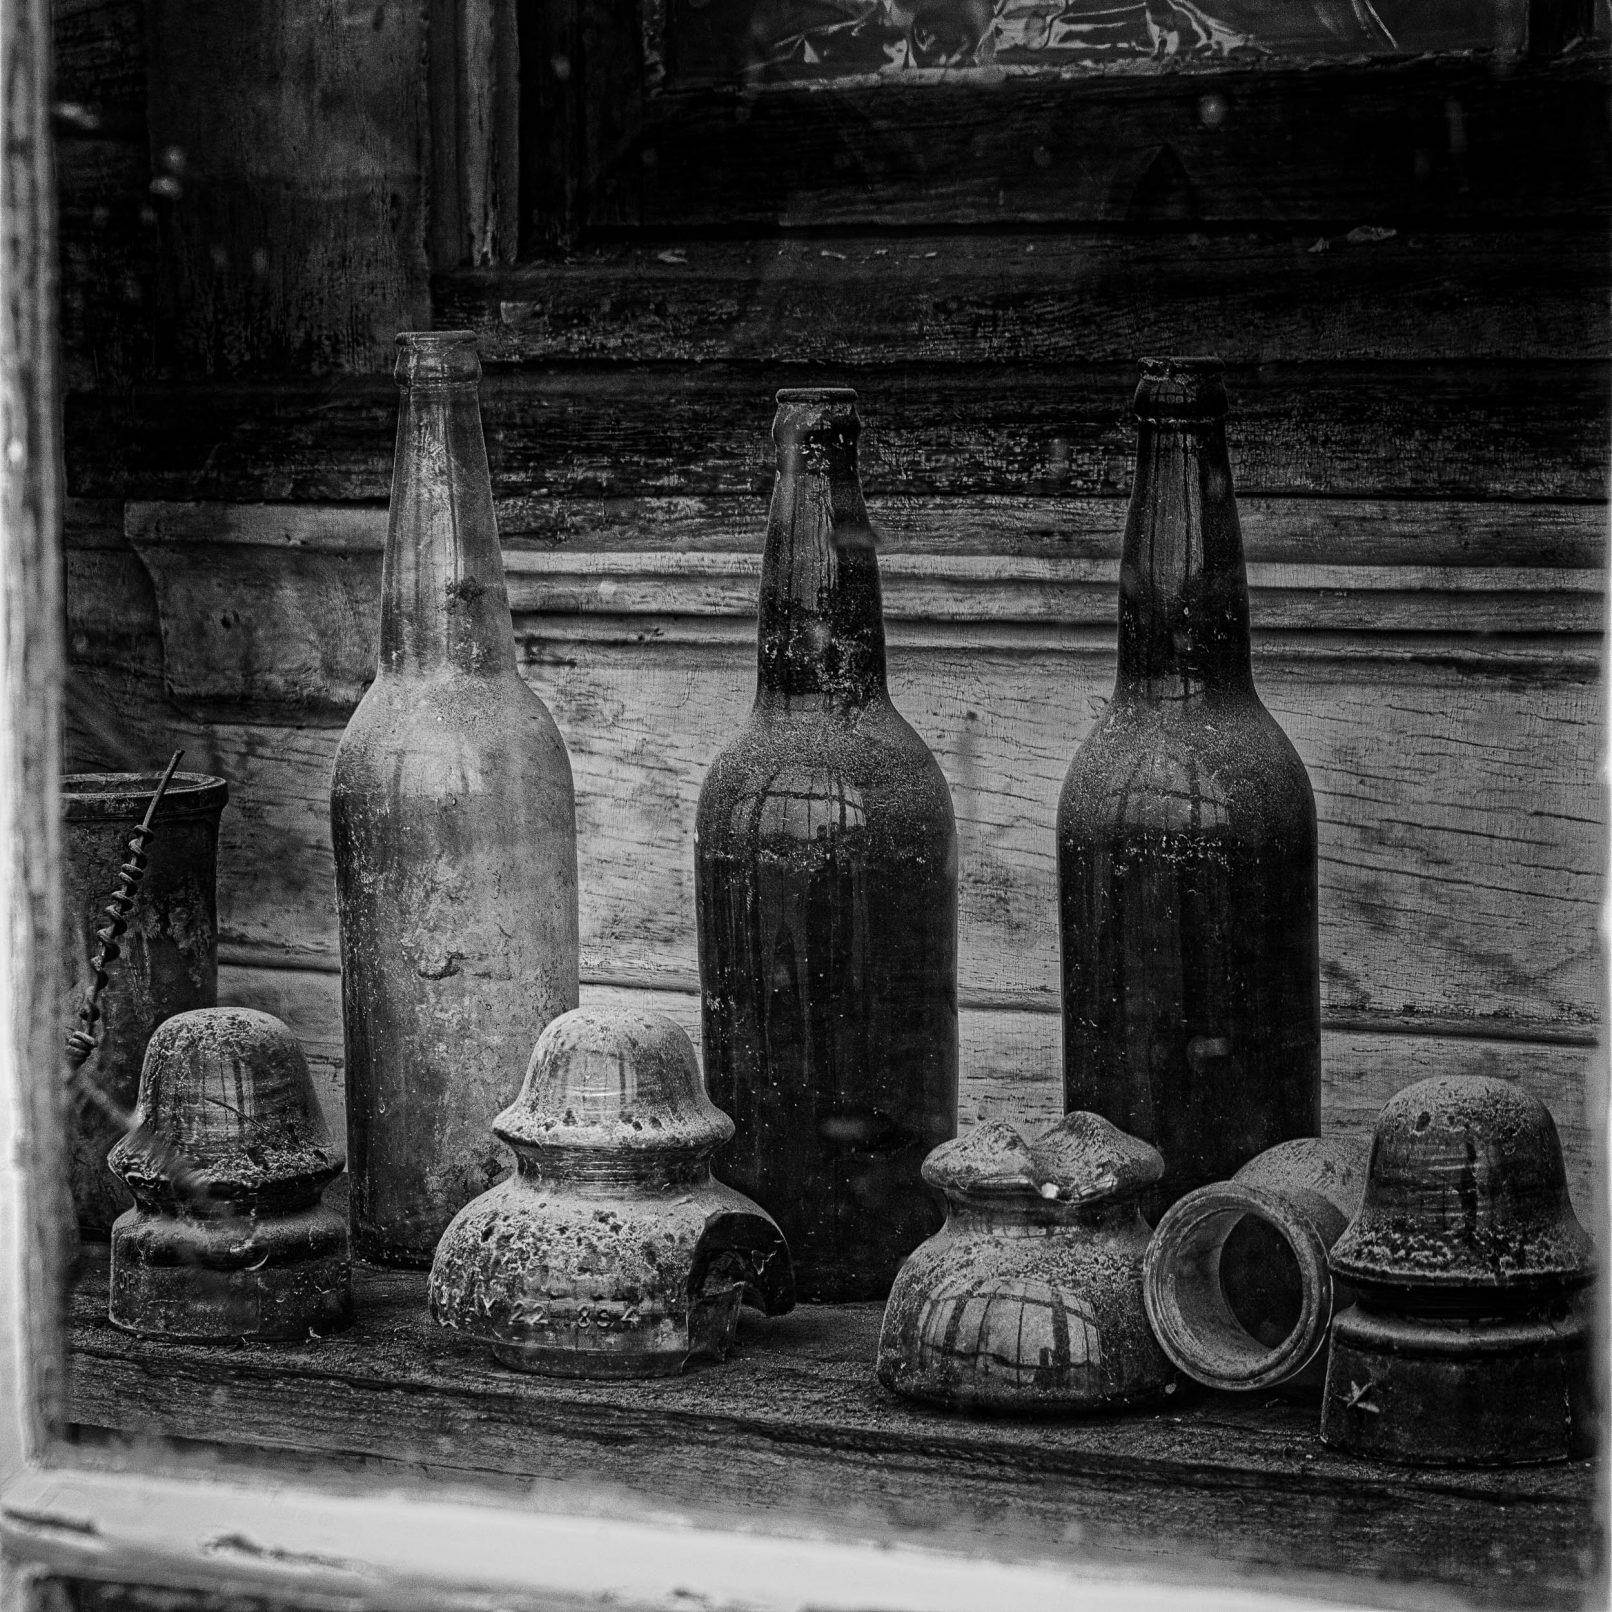 Old bottles in Bodi, California ghost town